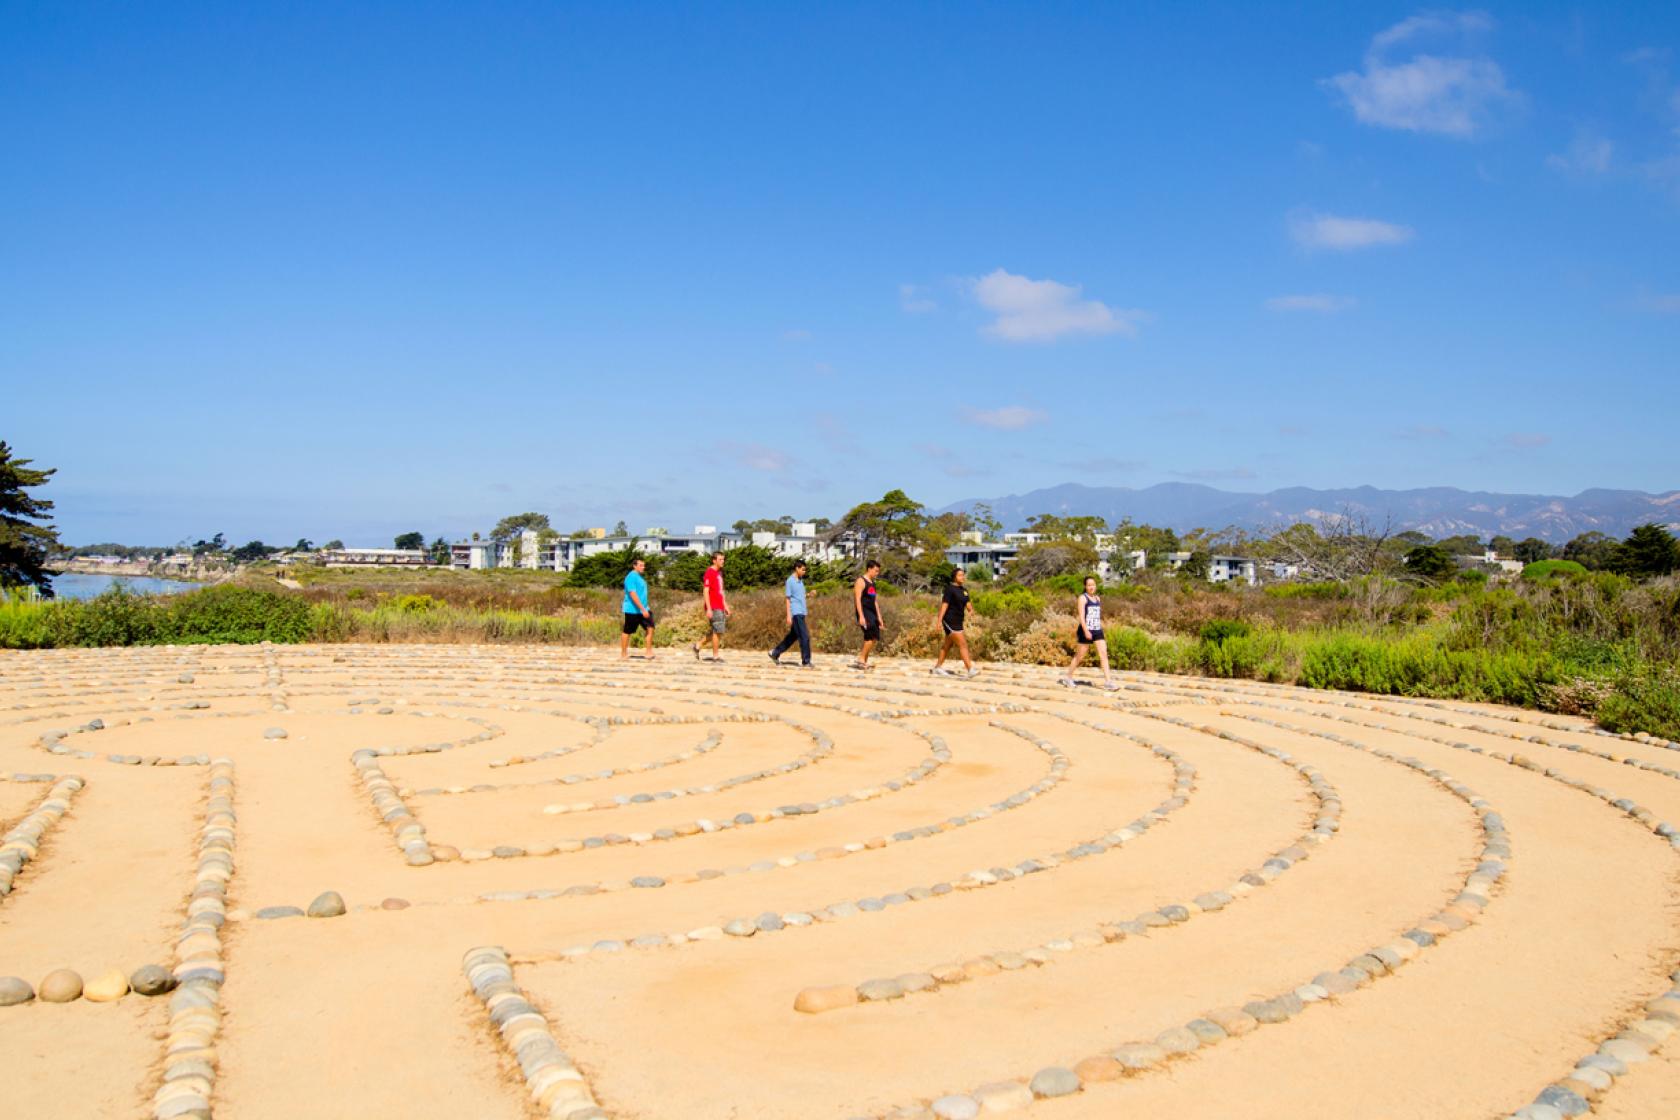 Labyrinth near Manzanita Villages